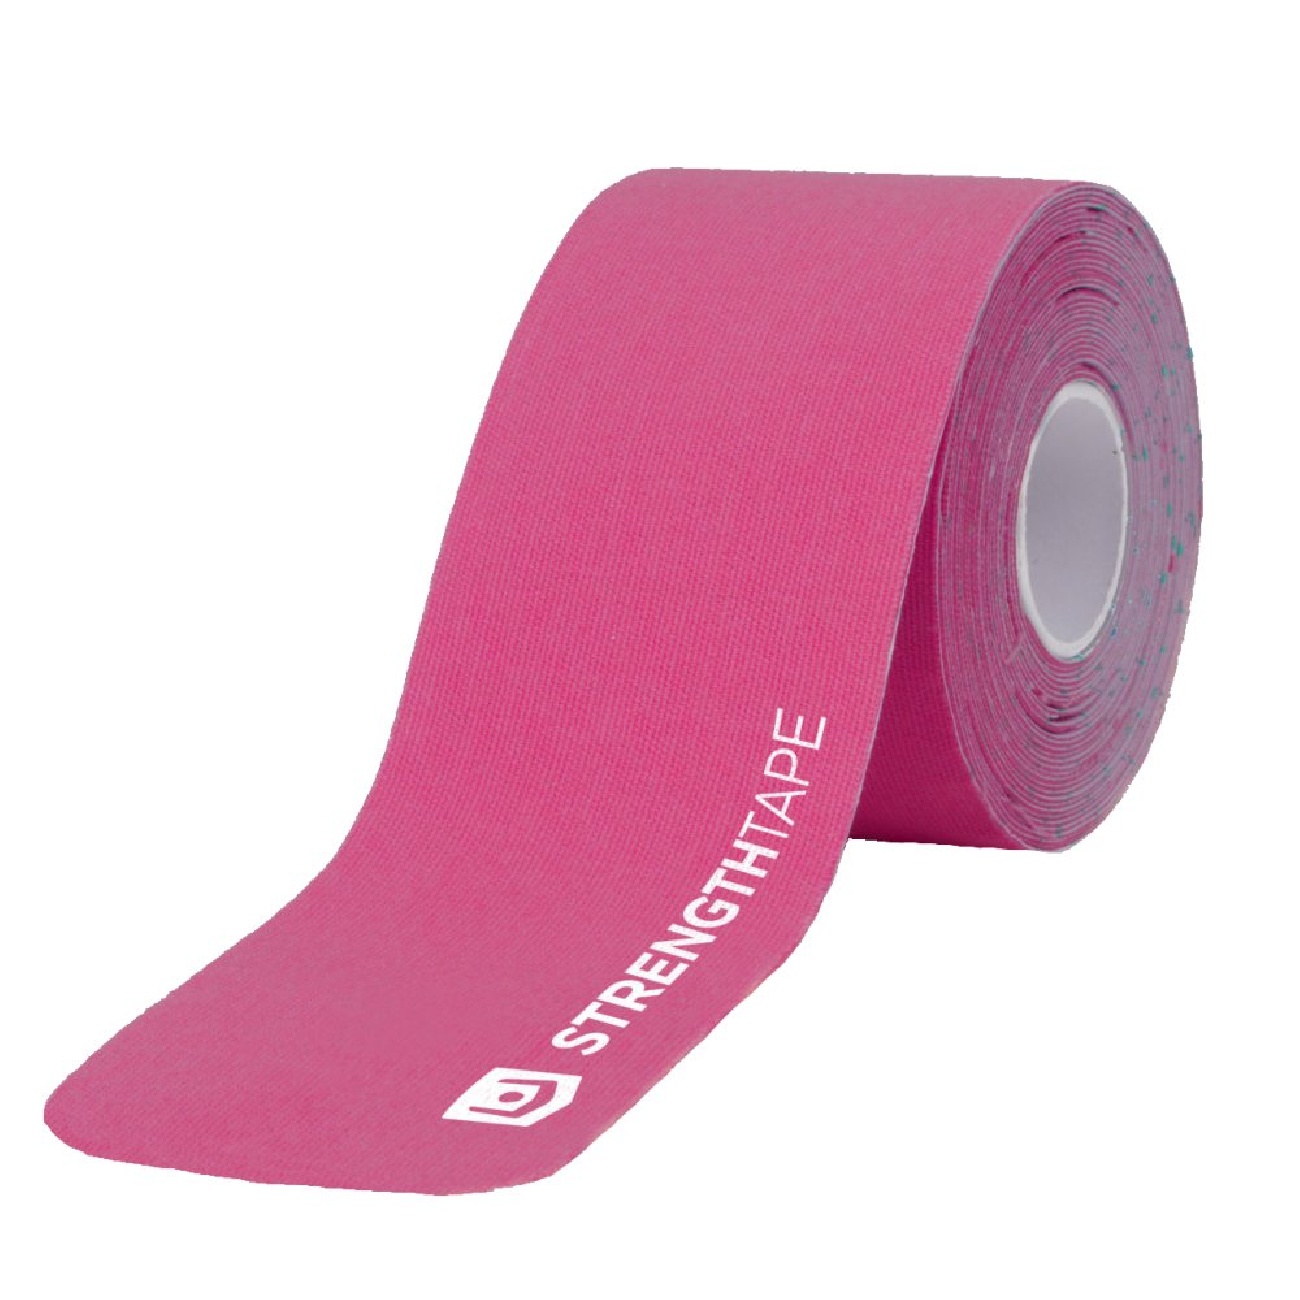 StrengthTape by LifeStrength - Precut Strips - Pink